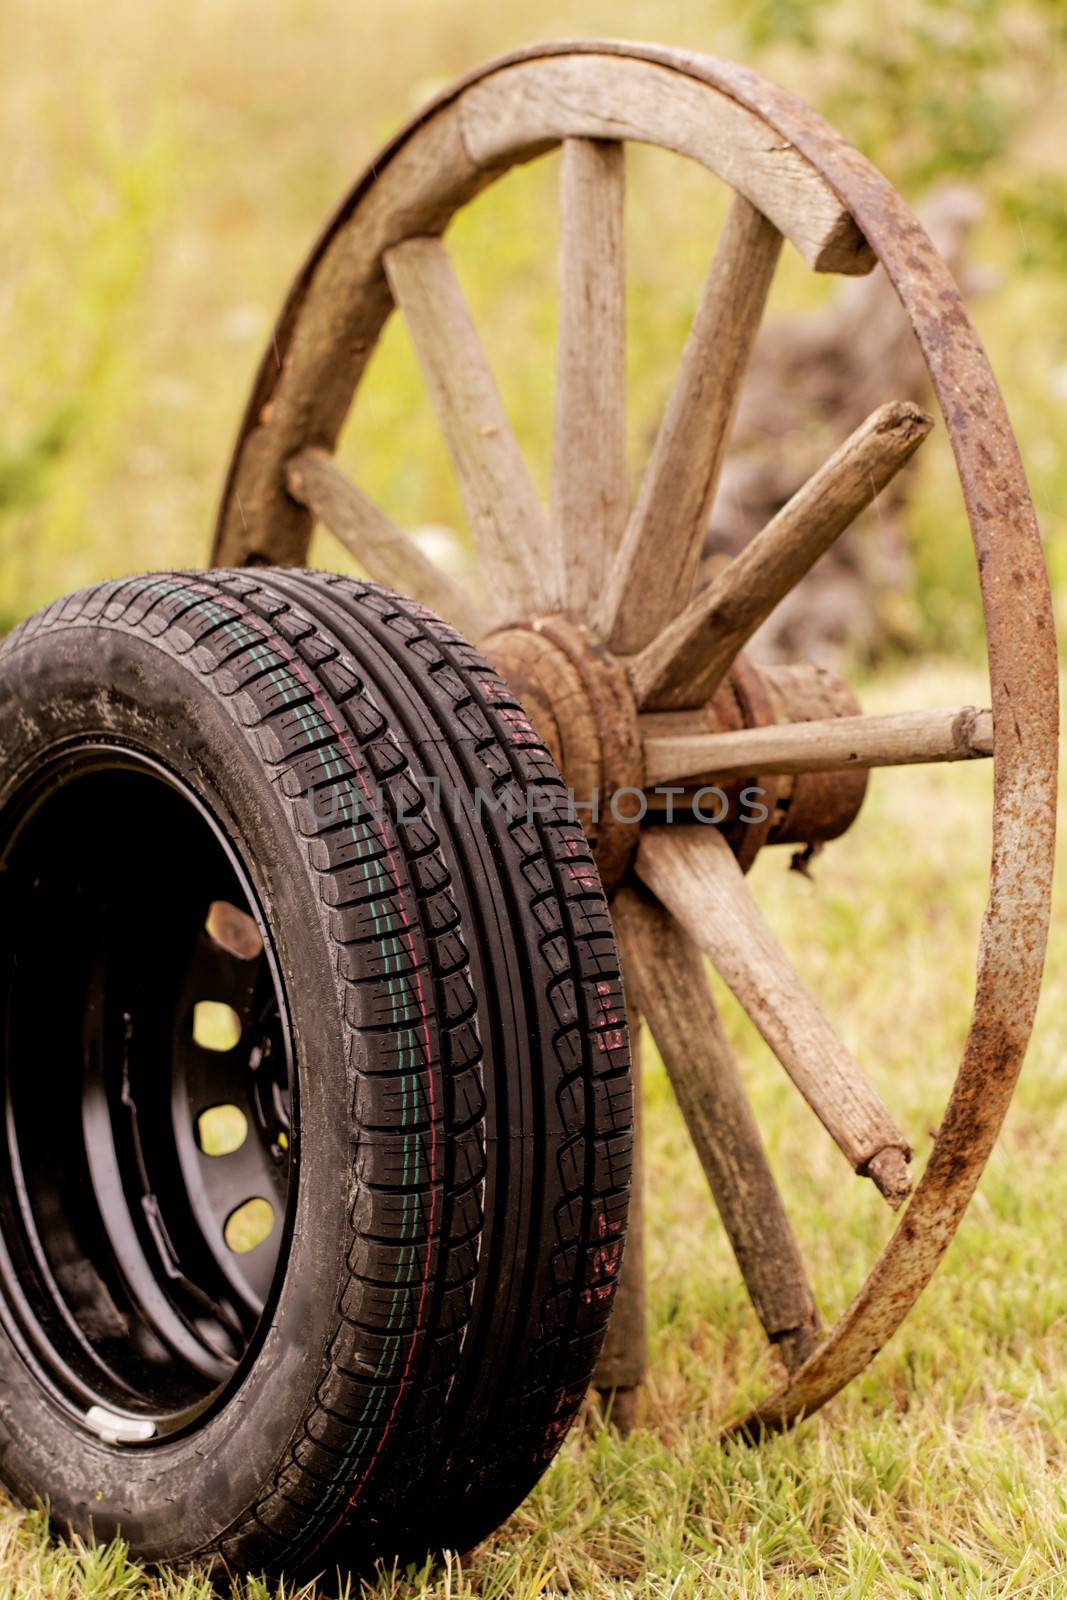 new and old broken wagon (car) wheel